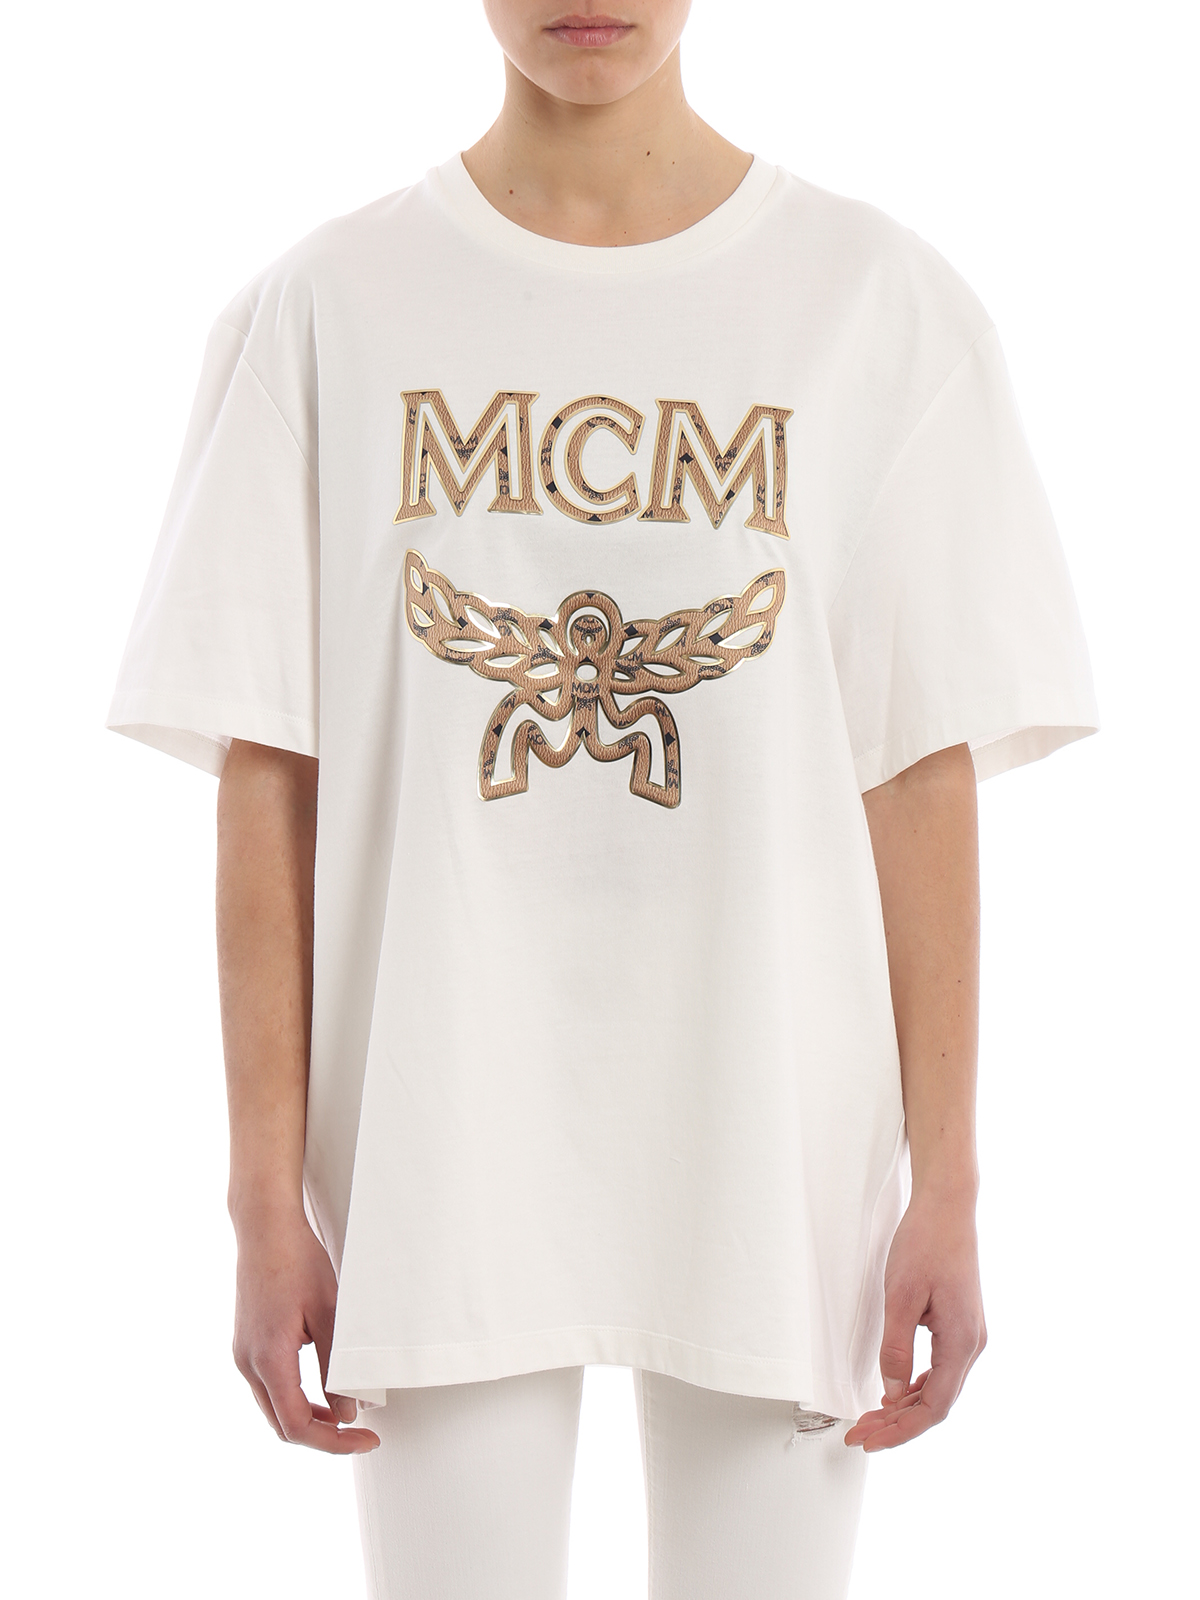 Tシャツ Mcm - Tシャツ - 白 - MHT8SMM10WI001 | iKRIX shop online